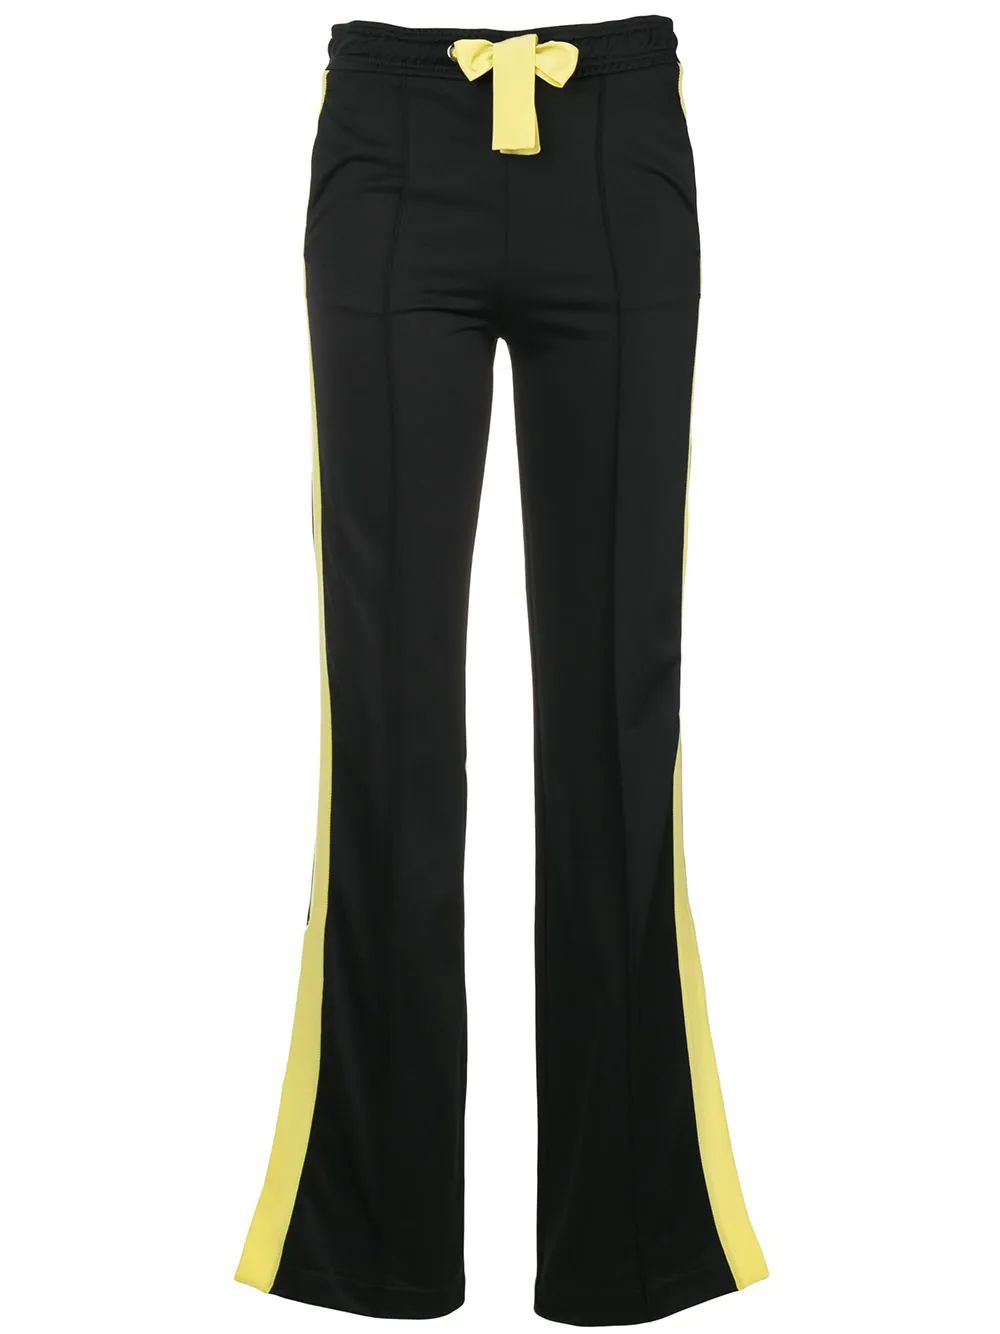 Dorothee Schumacher side striped track pants - Black | FarFetch US